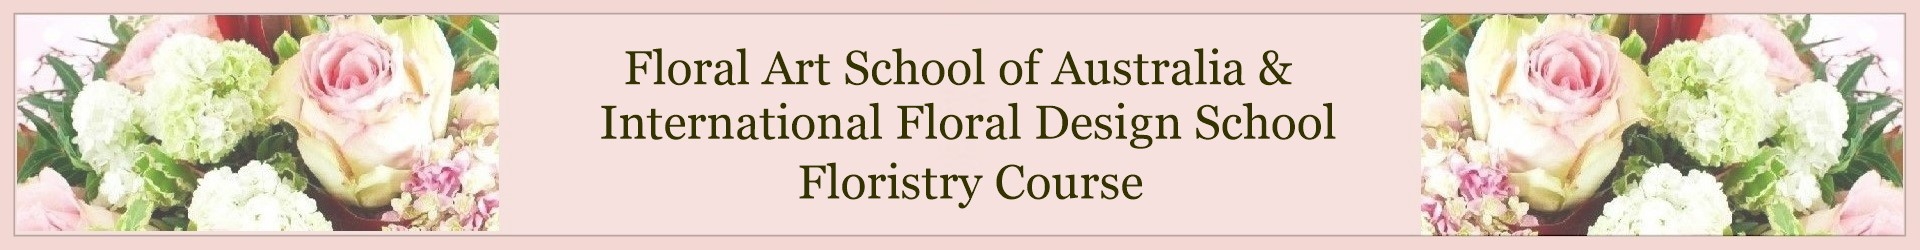 Floral Art School of Australia and International Floral Design School